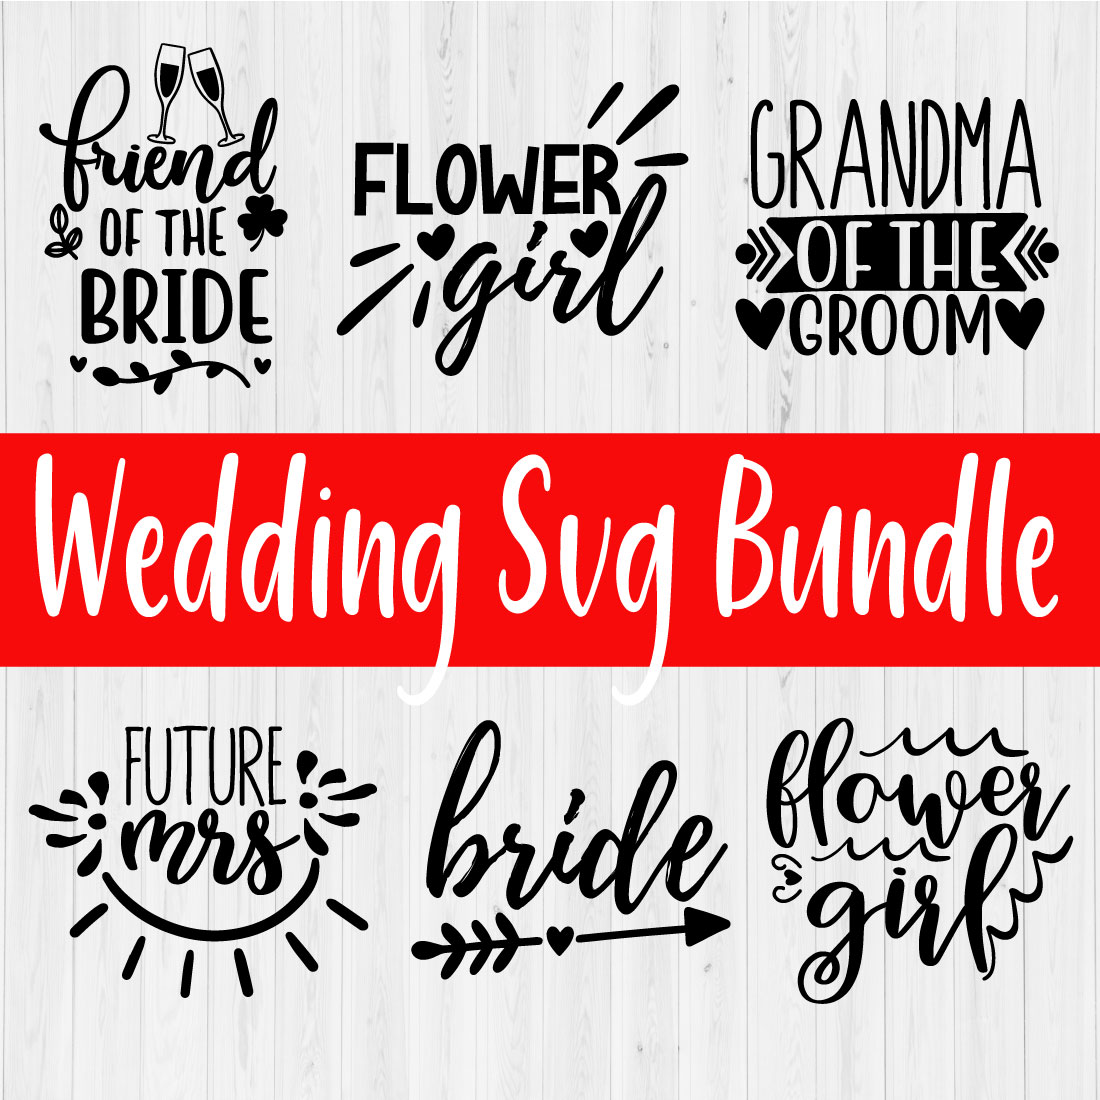 Wedding Typography Design Bundle Vol6 cover image.